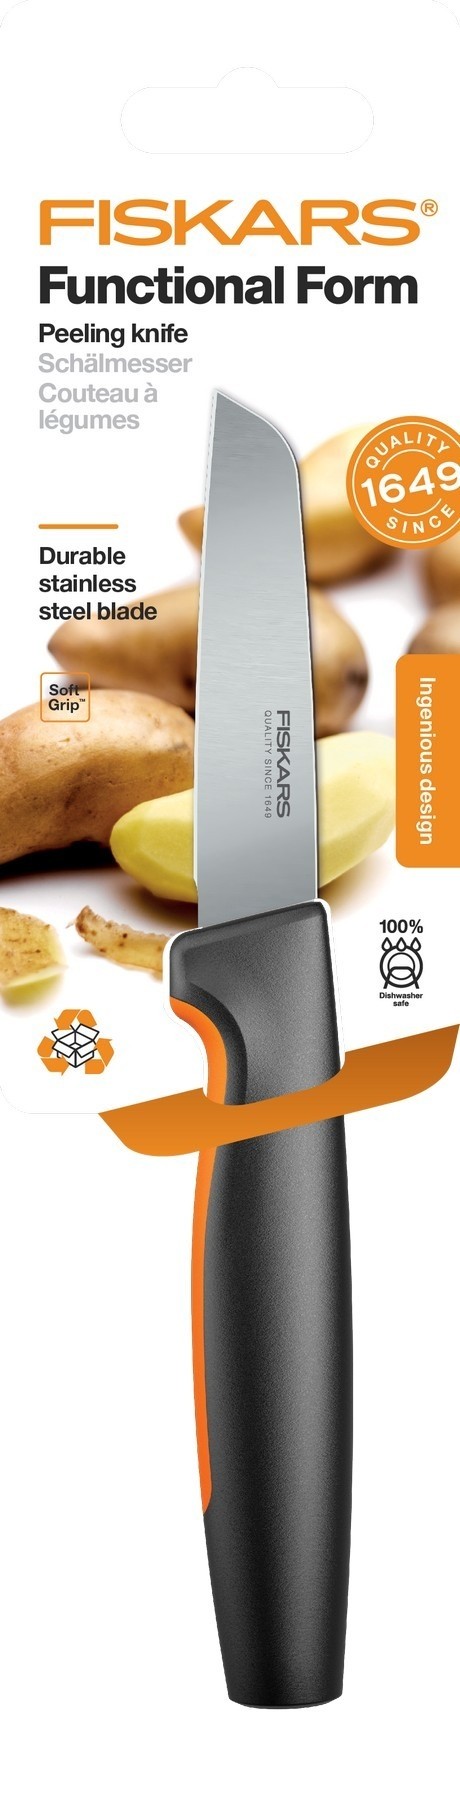 Purchase the Fiskars Functional Form Straight Peeling Knife online at smithsofloughton.com